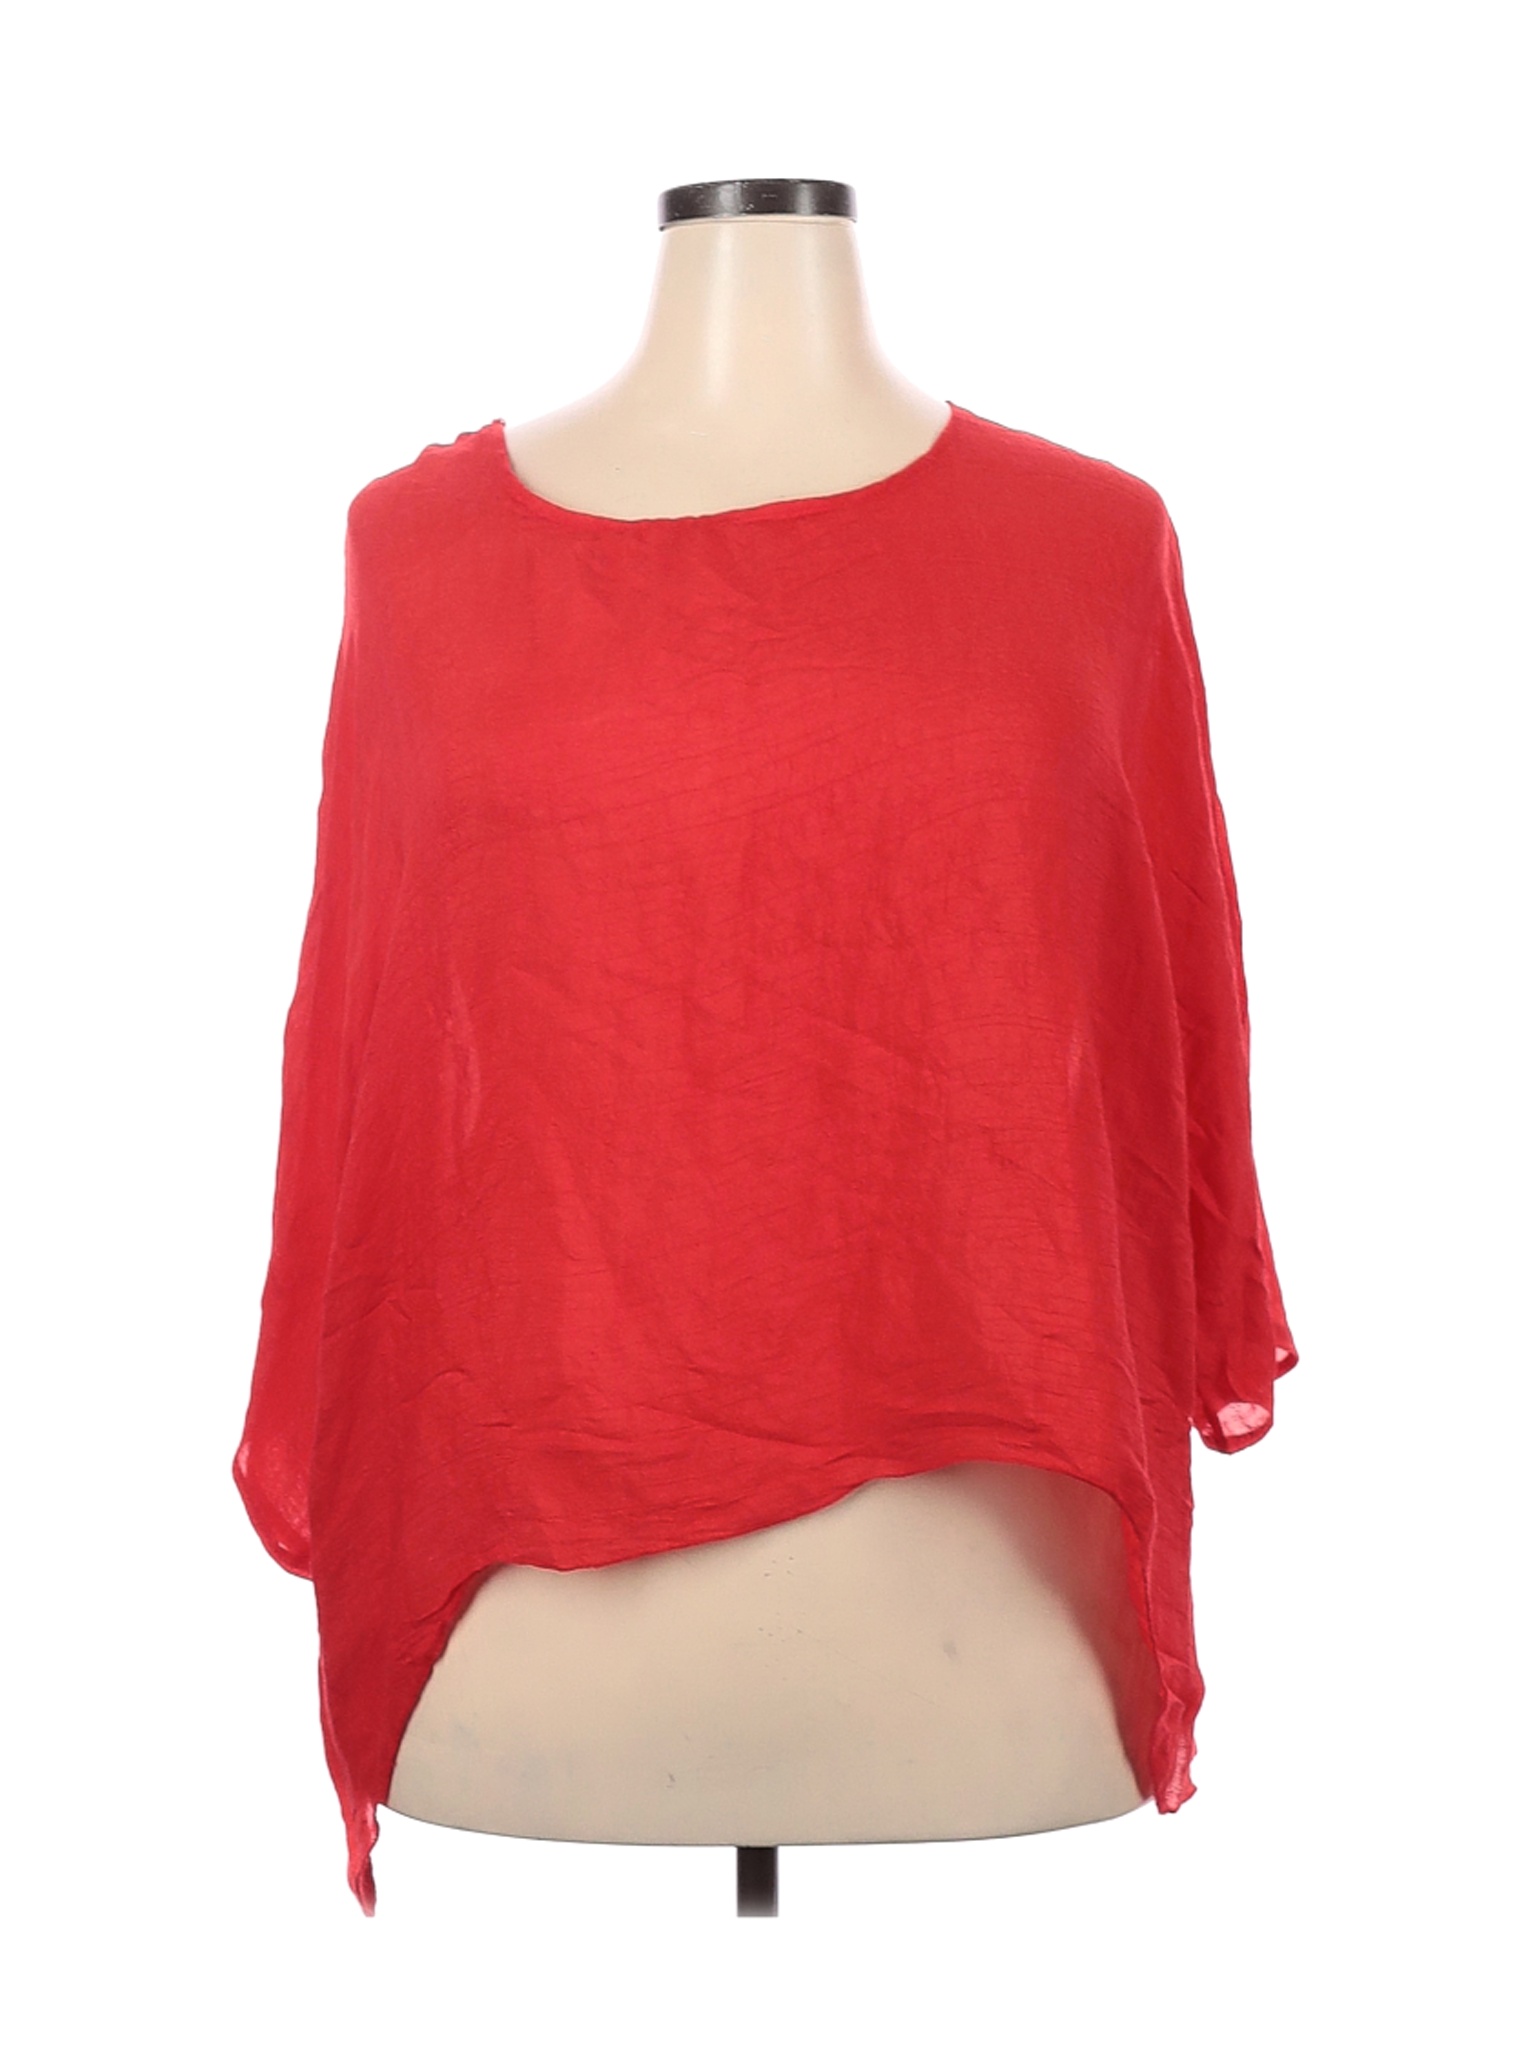 Unbranded Women Red 3/4 Sleeve Blouse 3X Plus | eBay